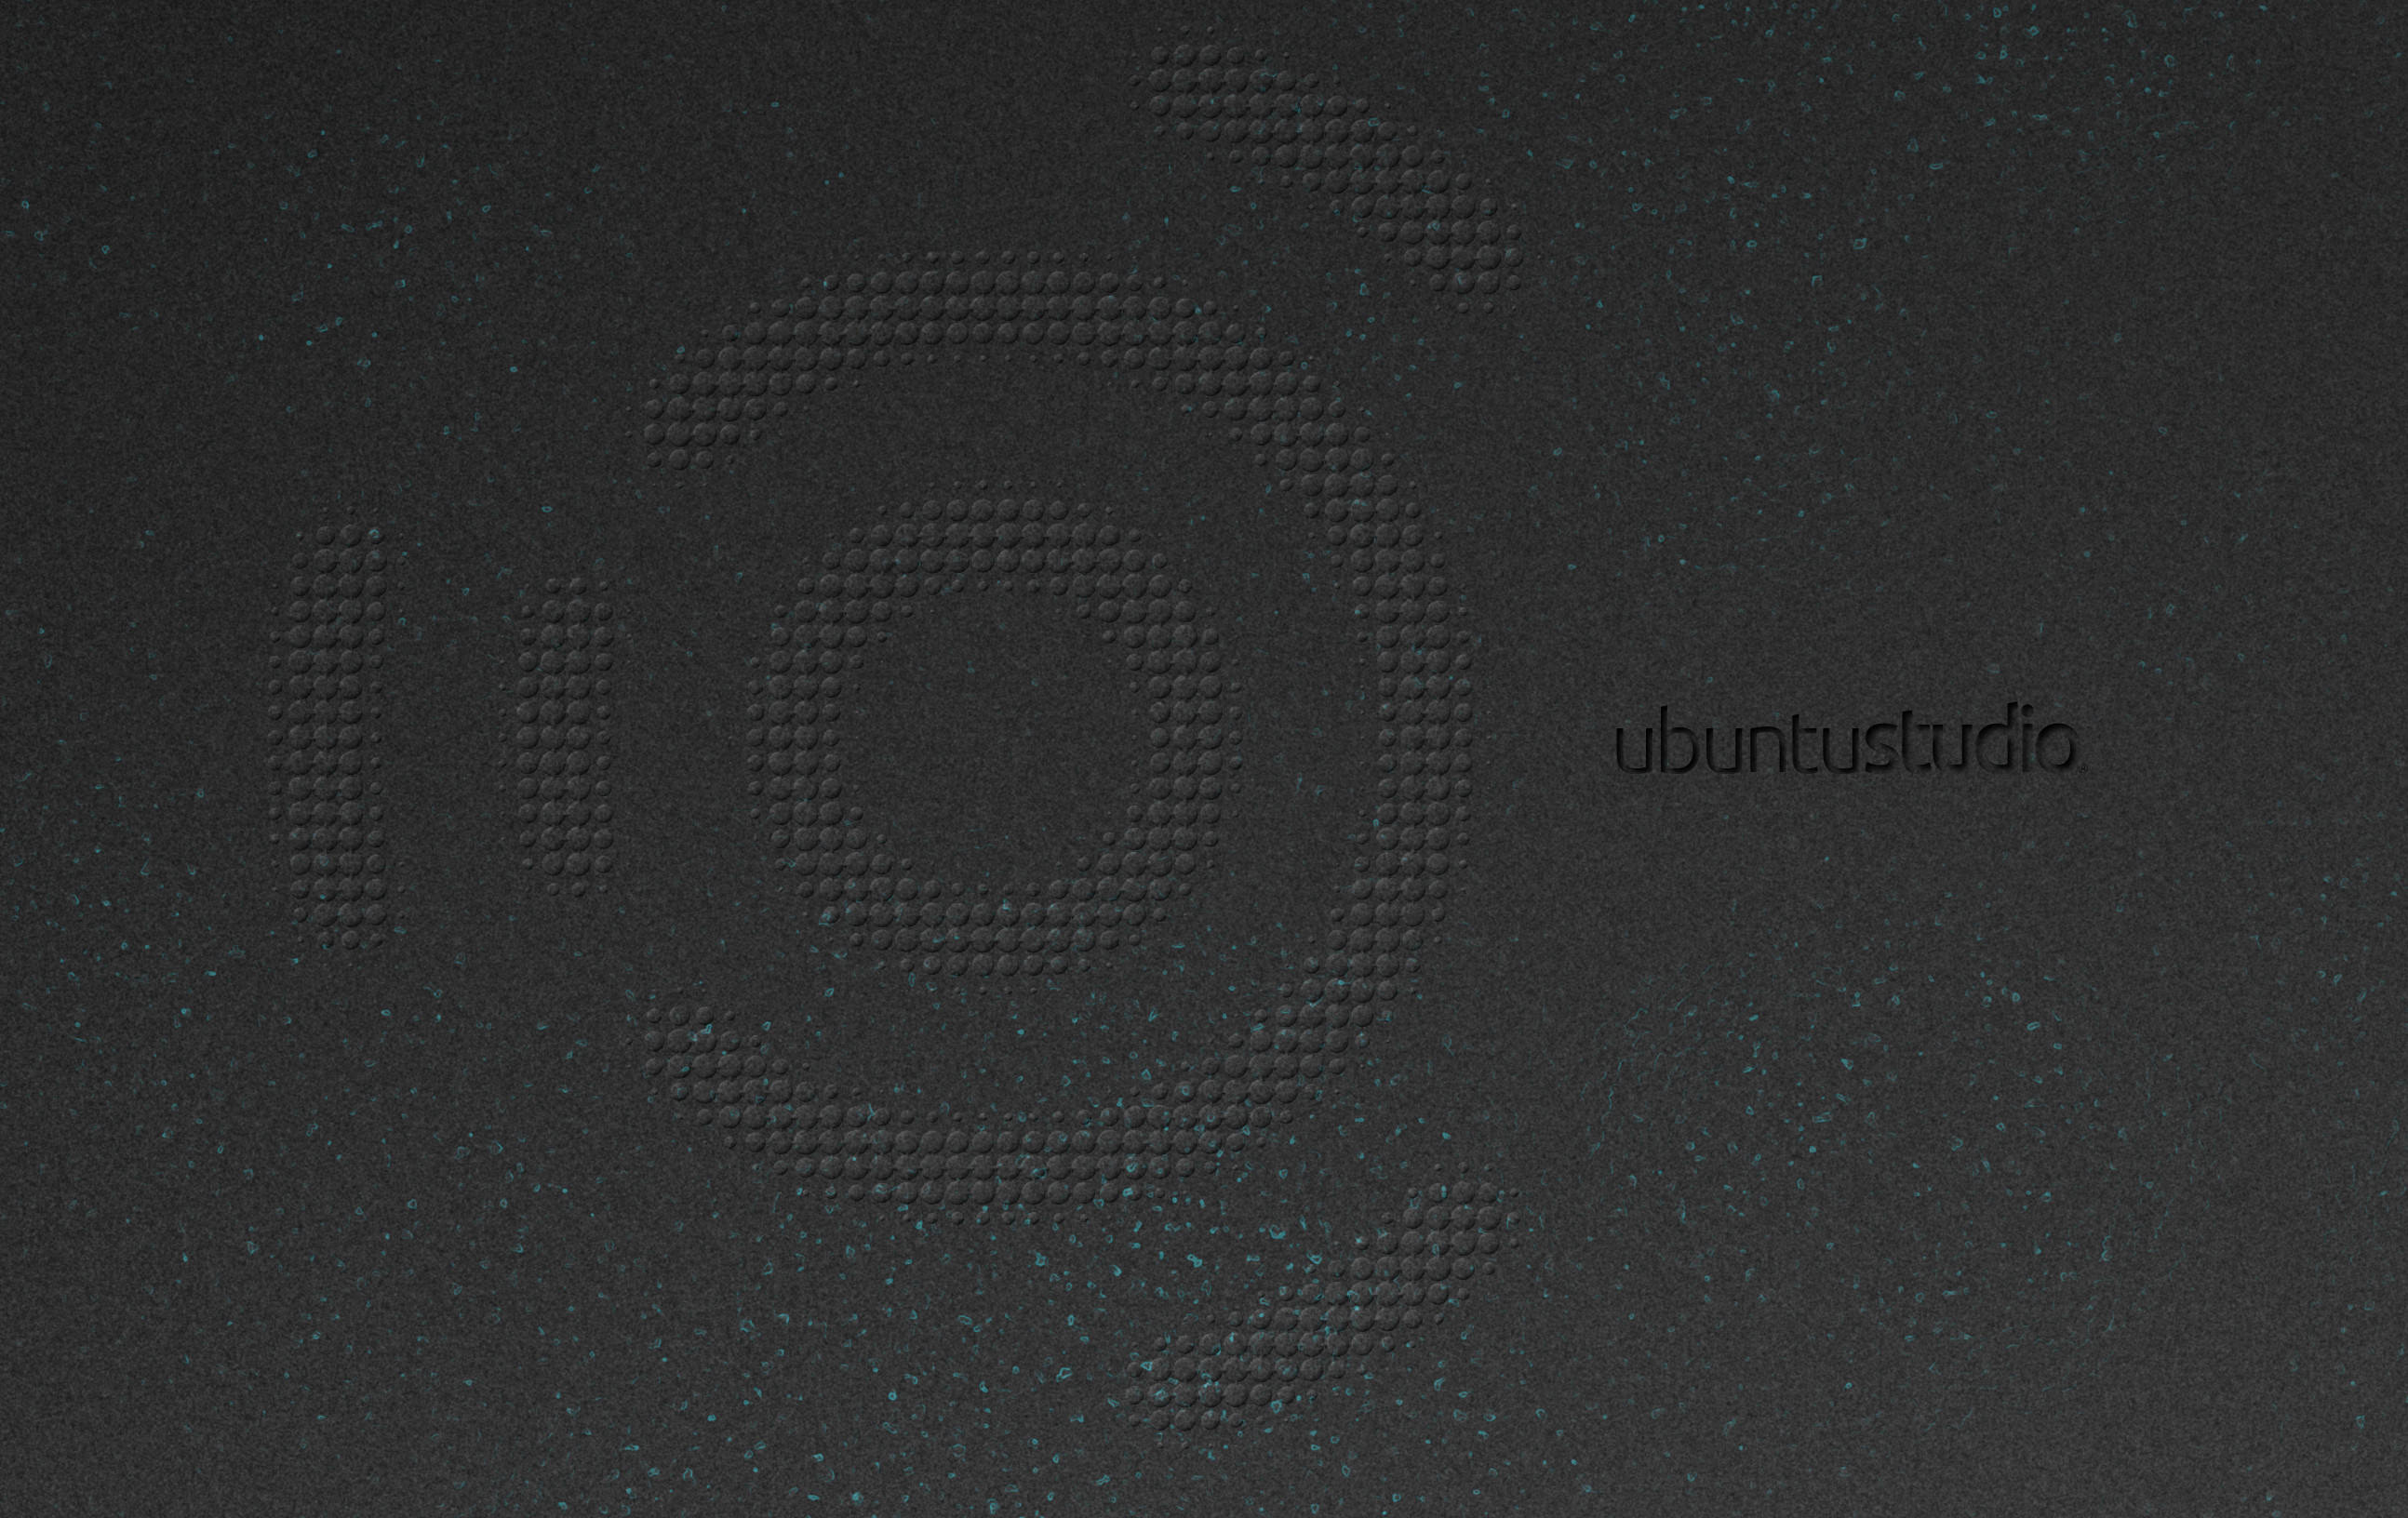 ubuntustudio wallpaper - mineral sparks improved - Imgur.jpg